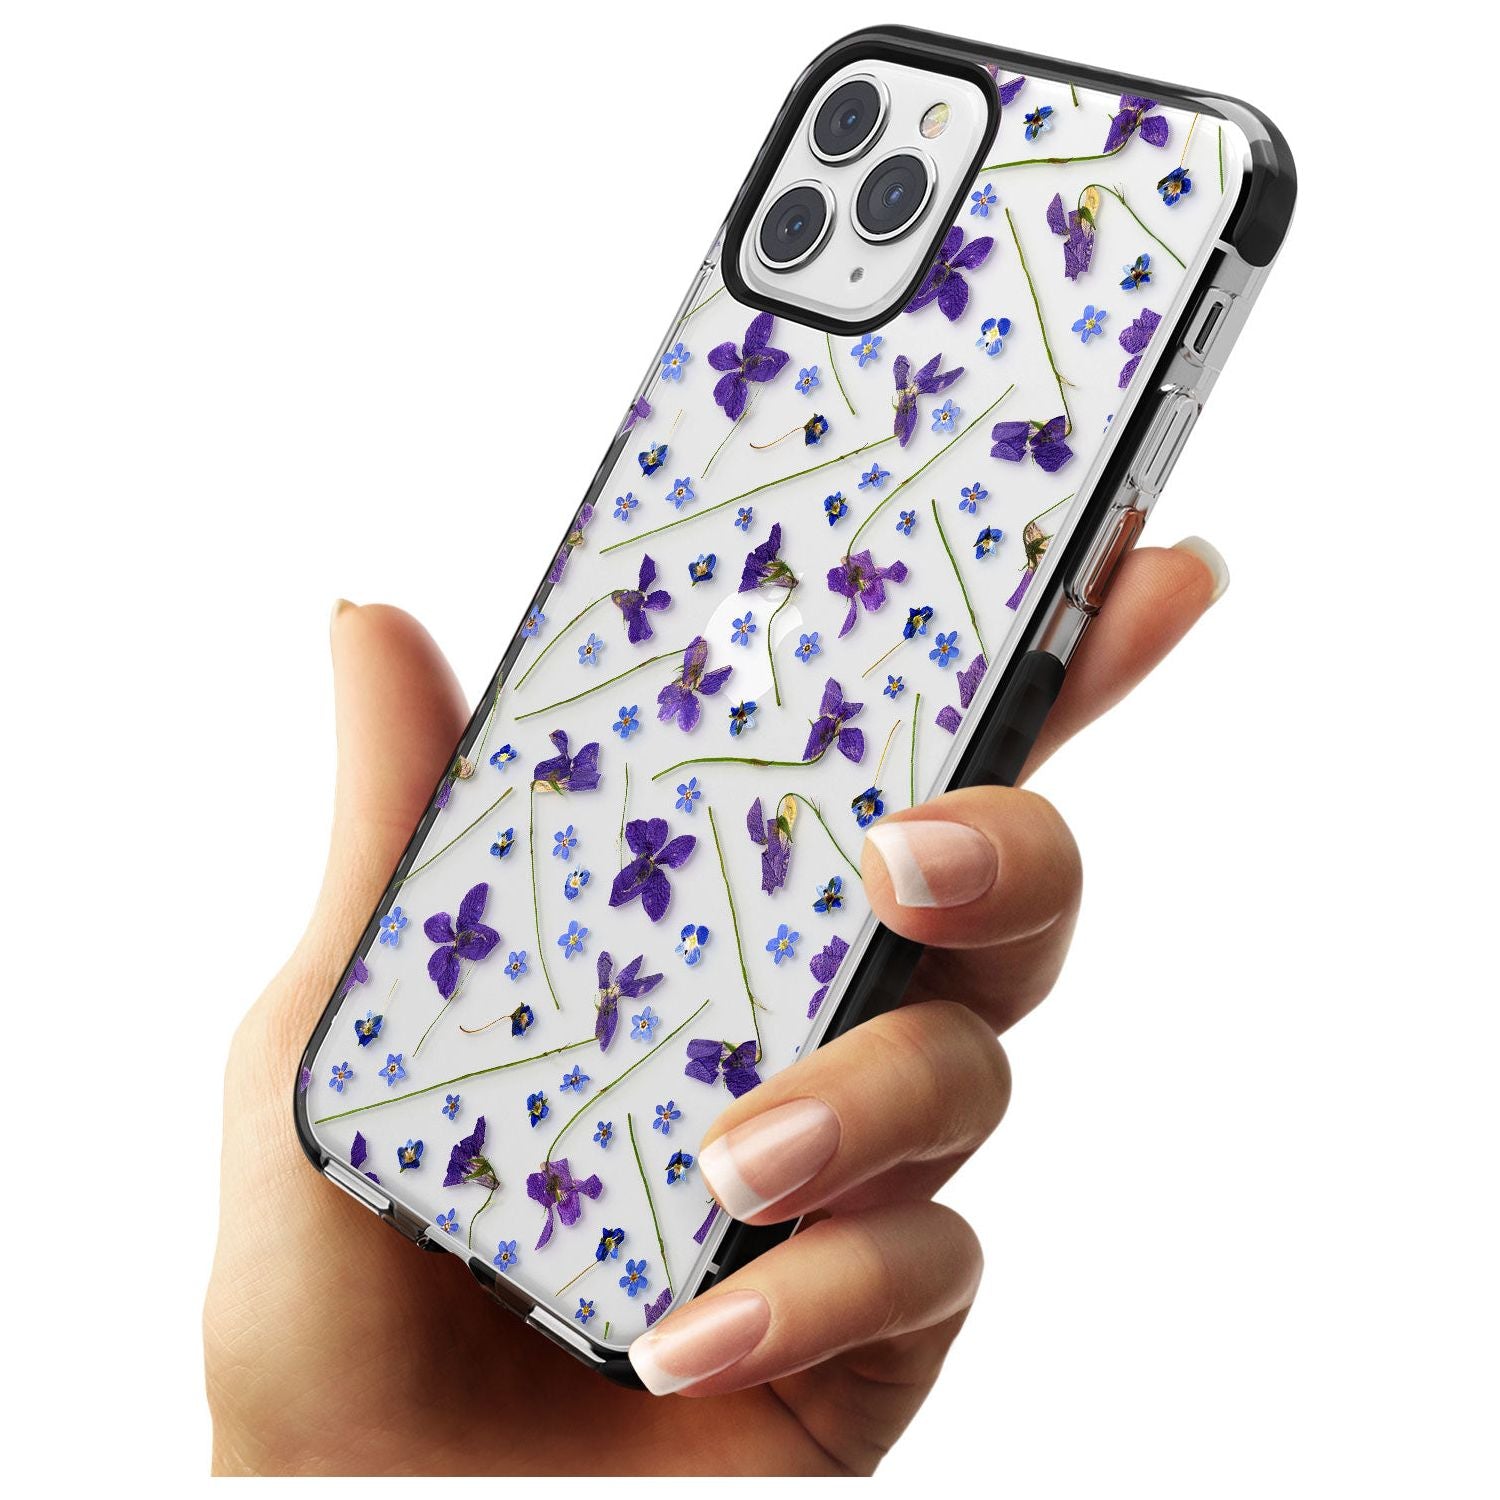 Violet & Blue Floral Pattern Design Black Impact Phone Case for iPhone 11 Pro Max